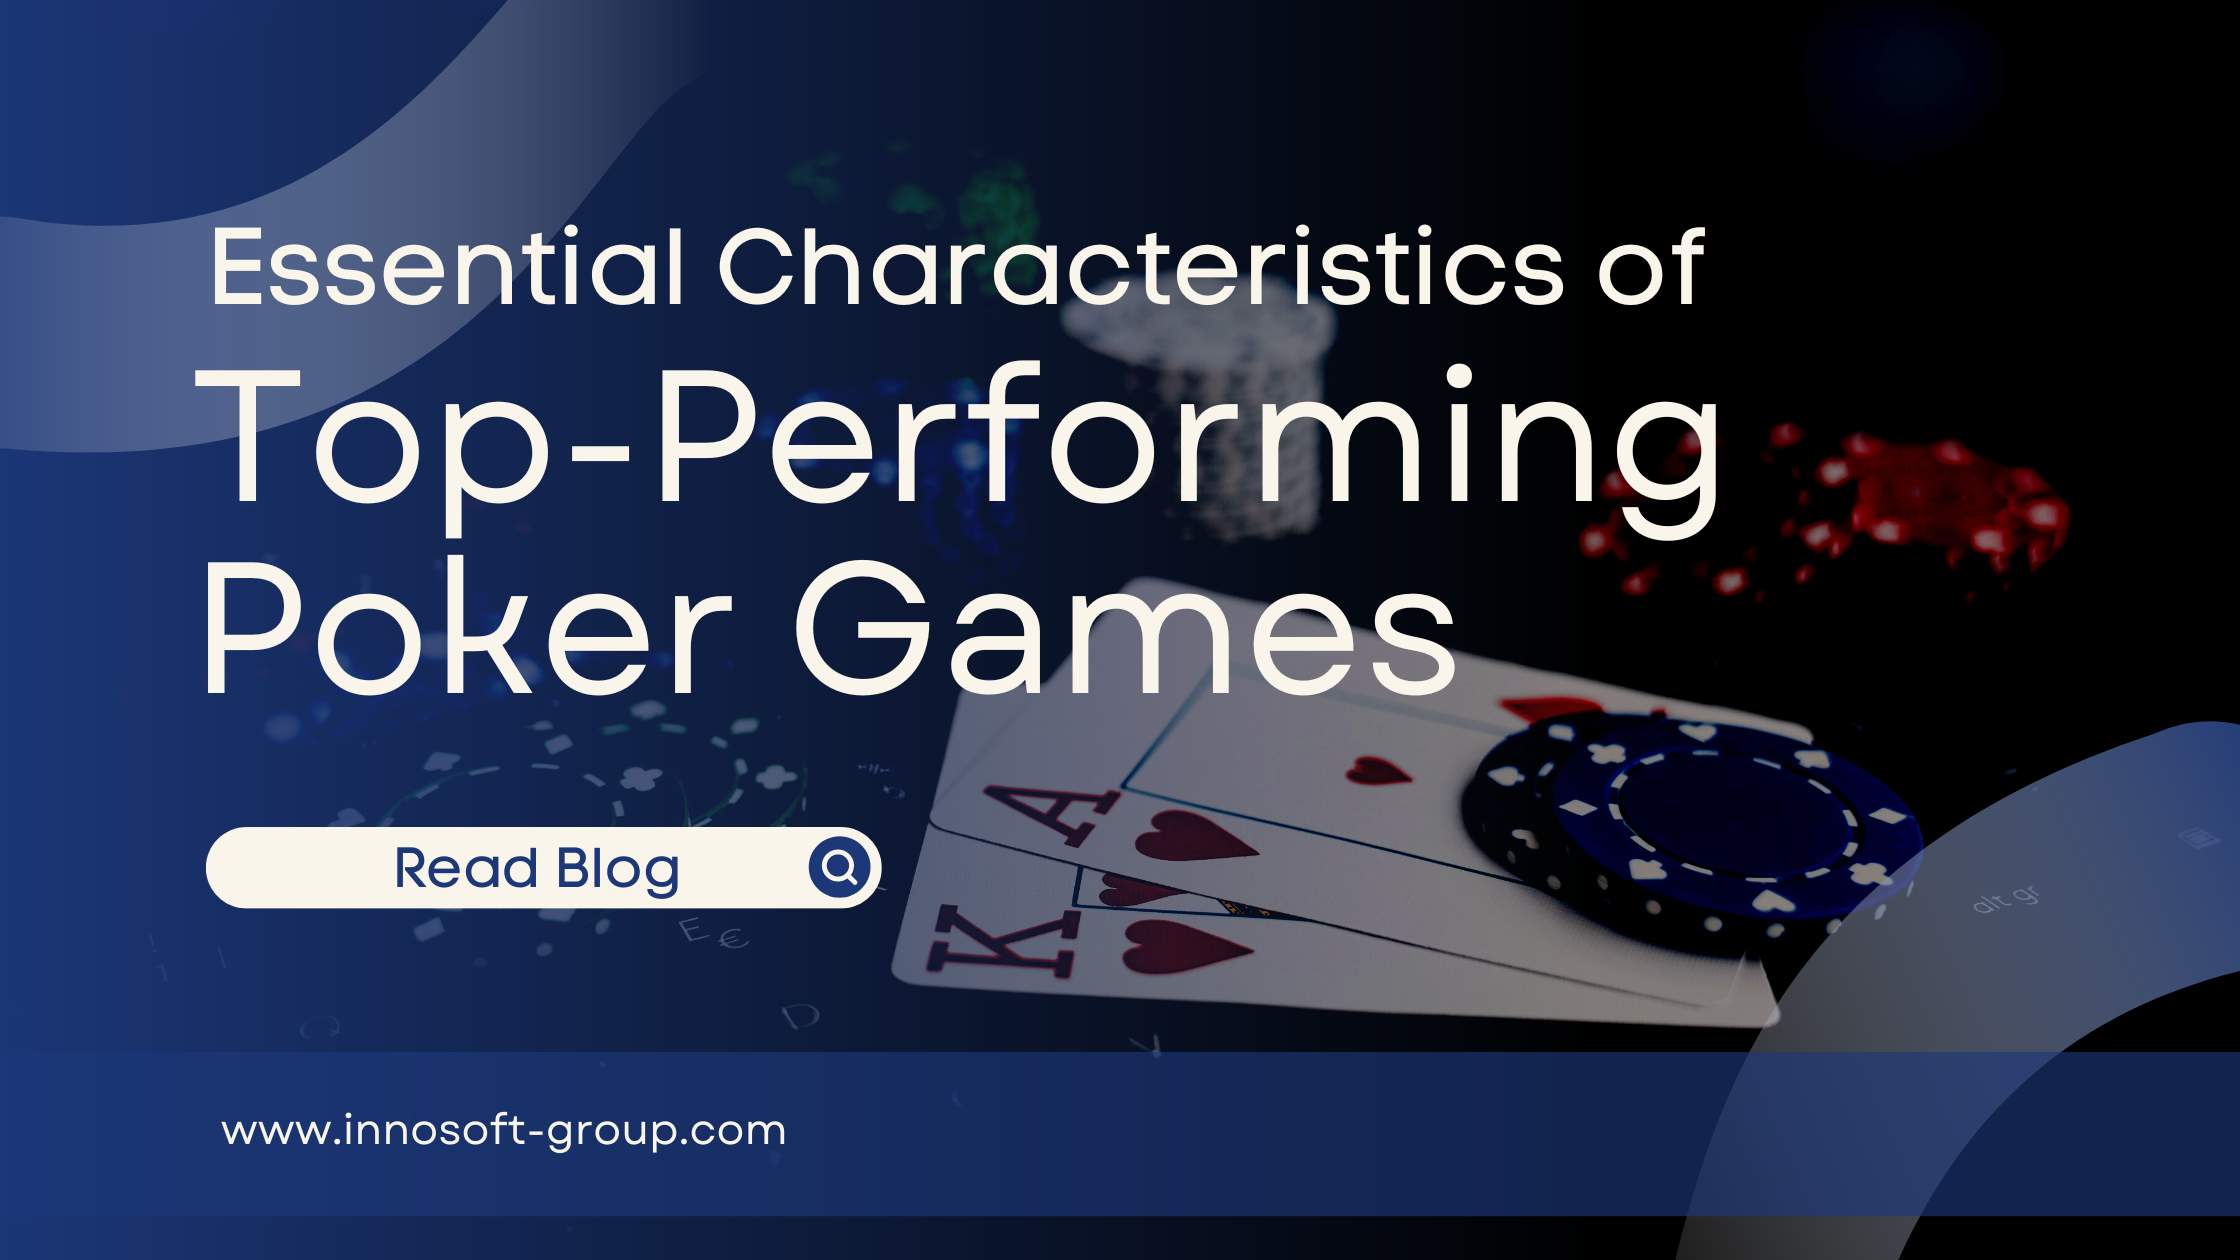 Top performing poker game app